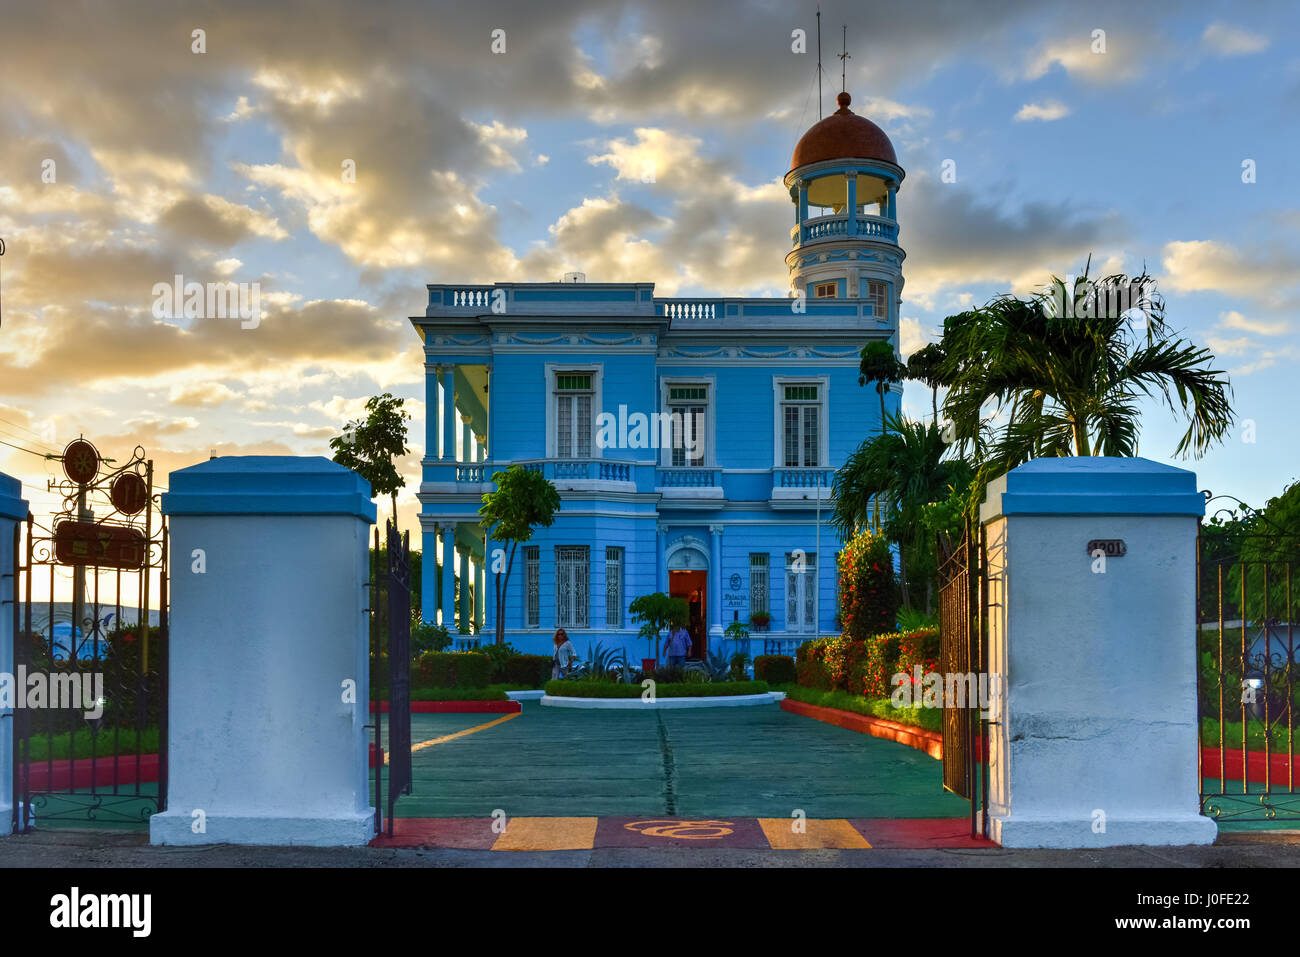 Cienfuegos, Cuba - January 11, 2017: Hotel Palacio Azul, an ecletic style palace in Cienfuegos, Cuba. Stock Photo